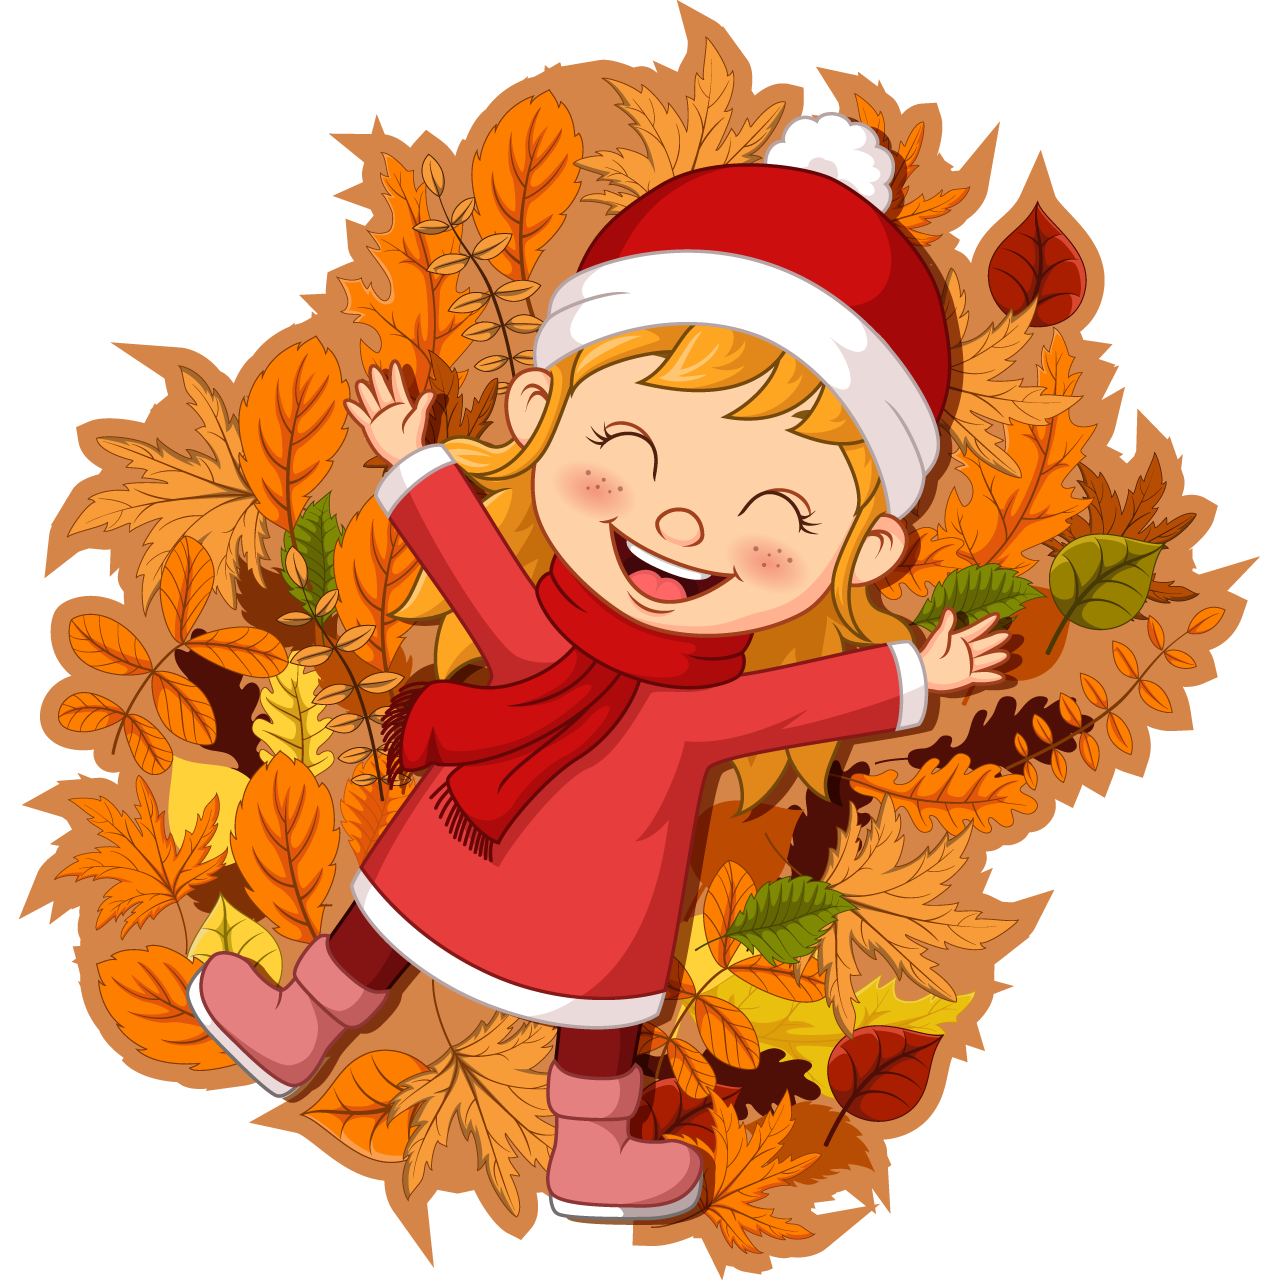 Hi clipart cartoon happy little girl lying autumn leaves cartoon illustration image